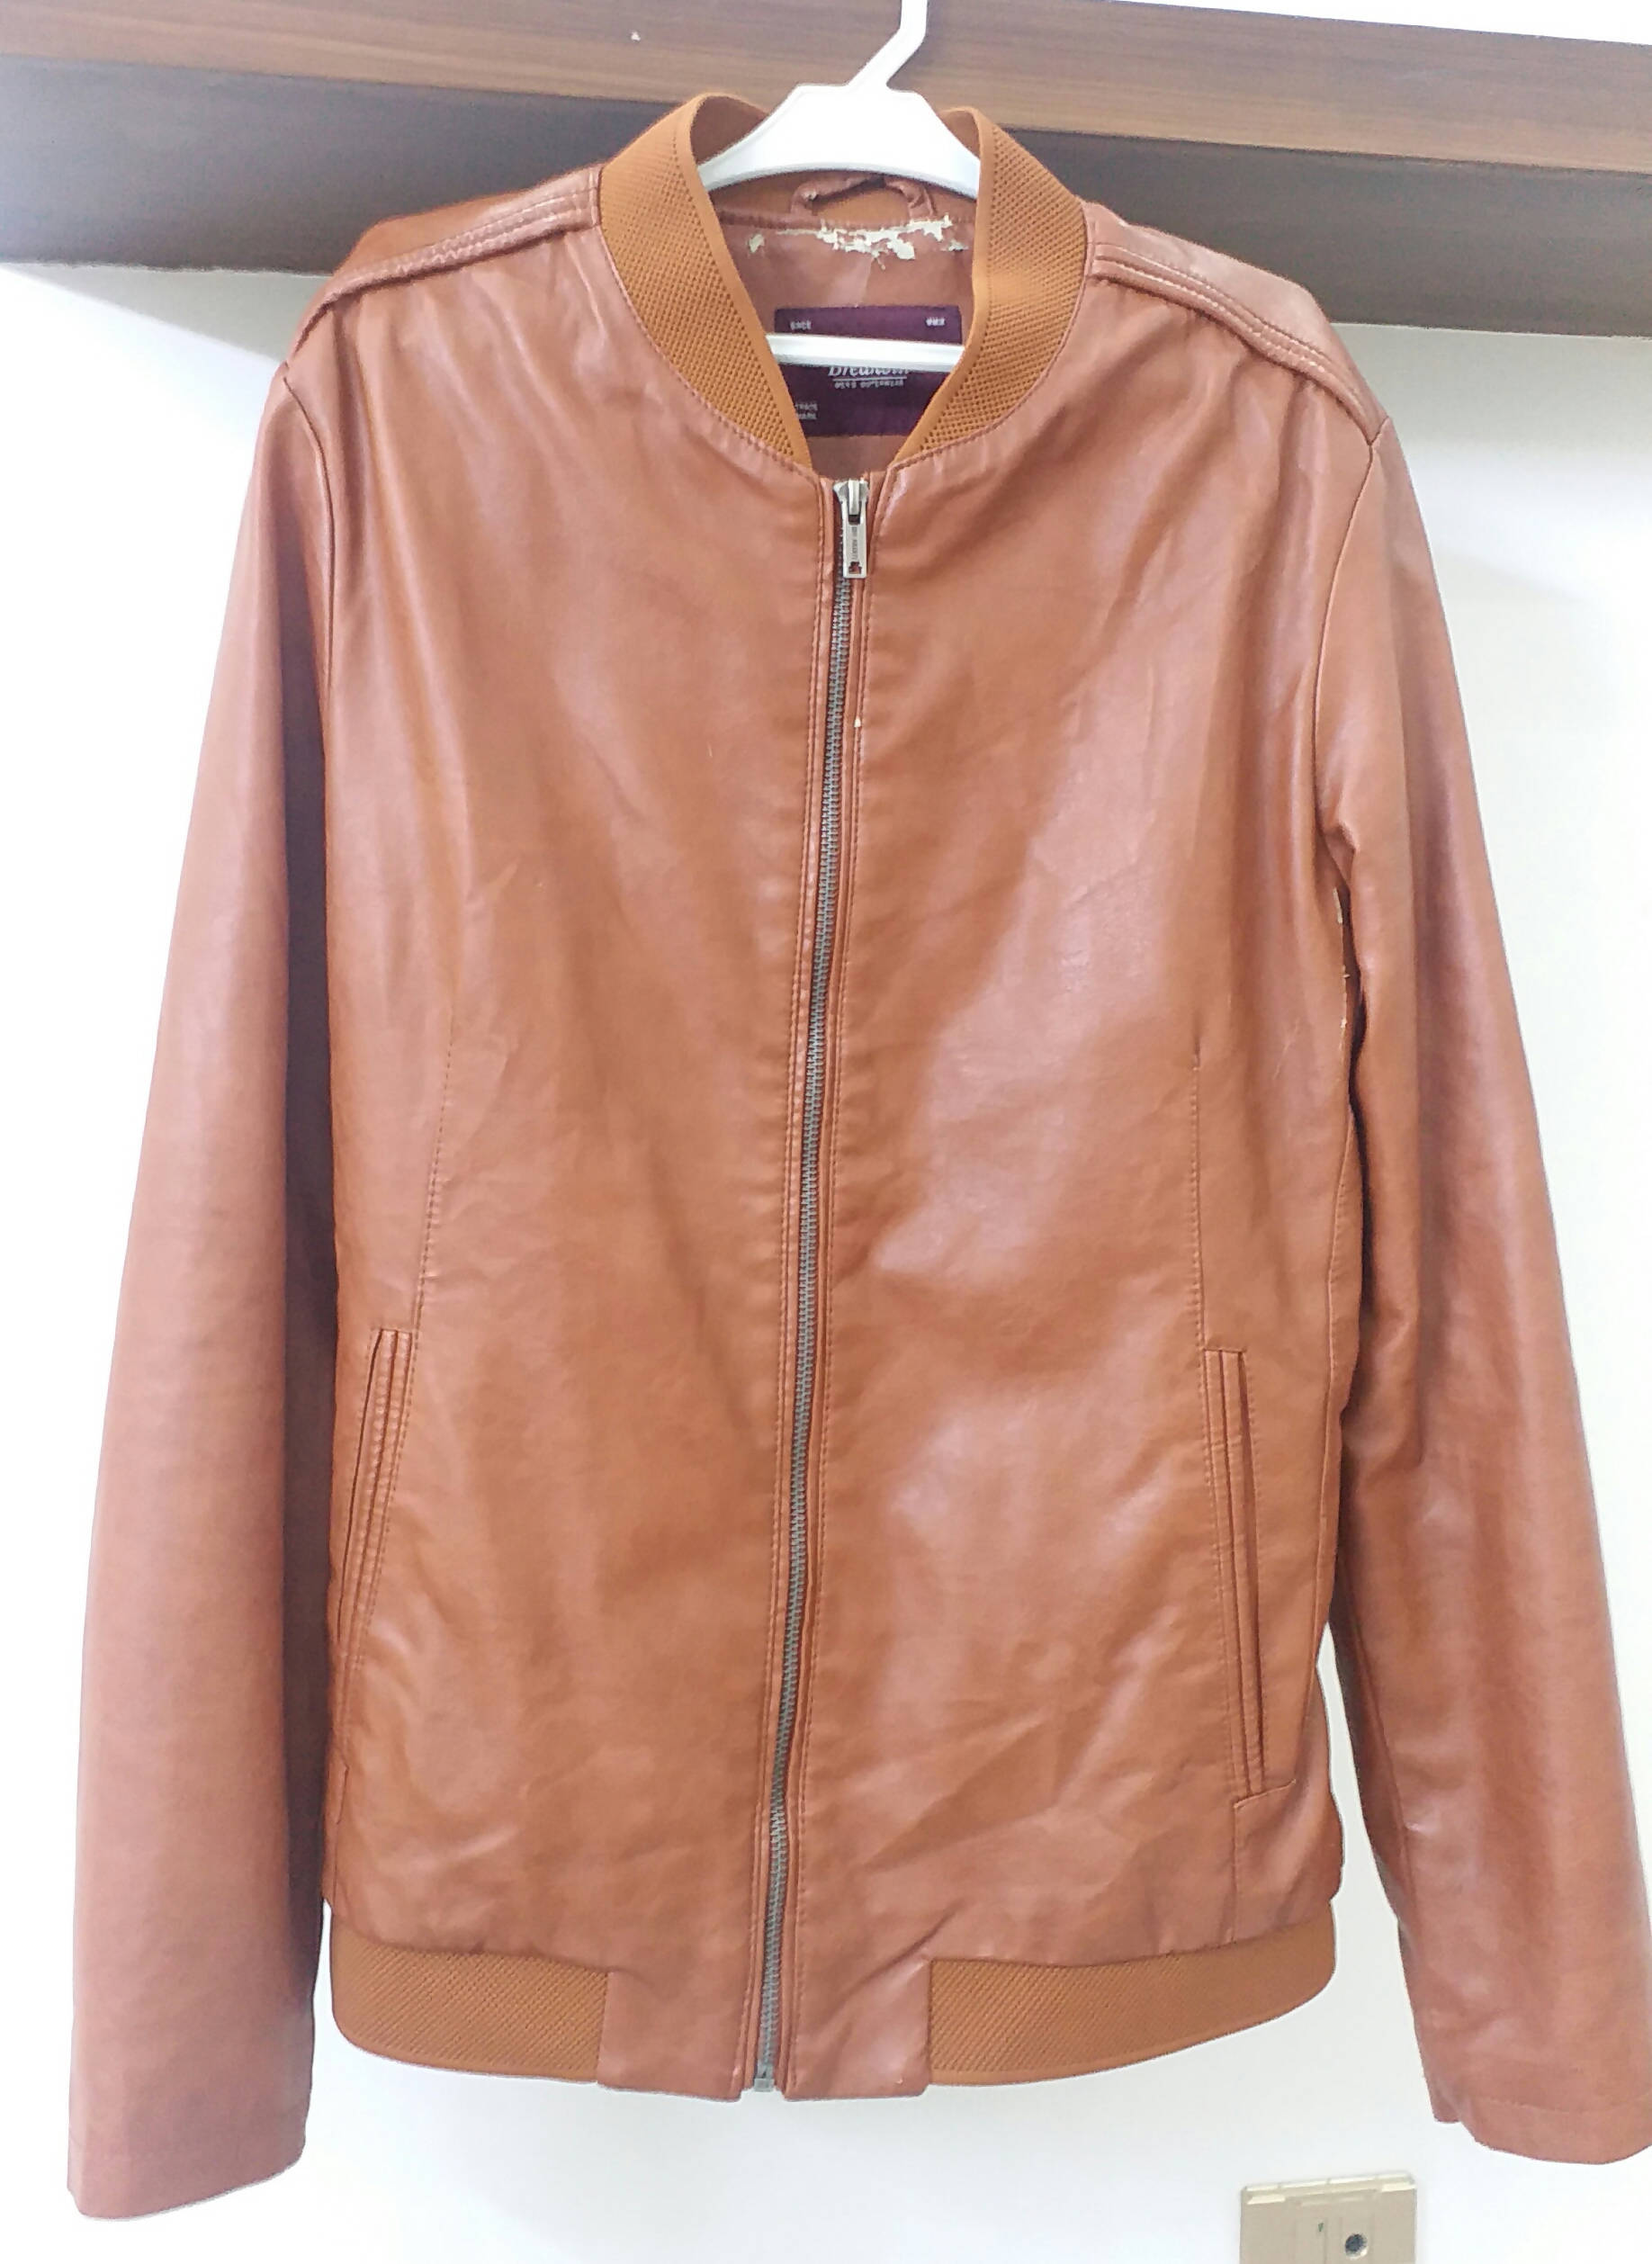 Breakout | Leather jacket | Men's jackets | Preloved